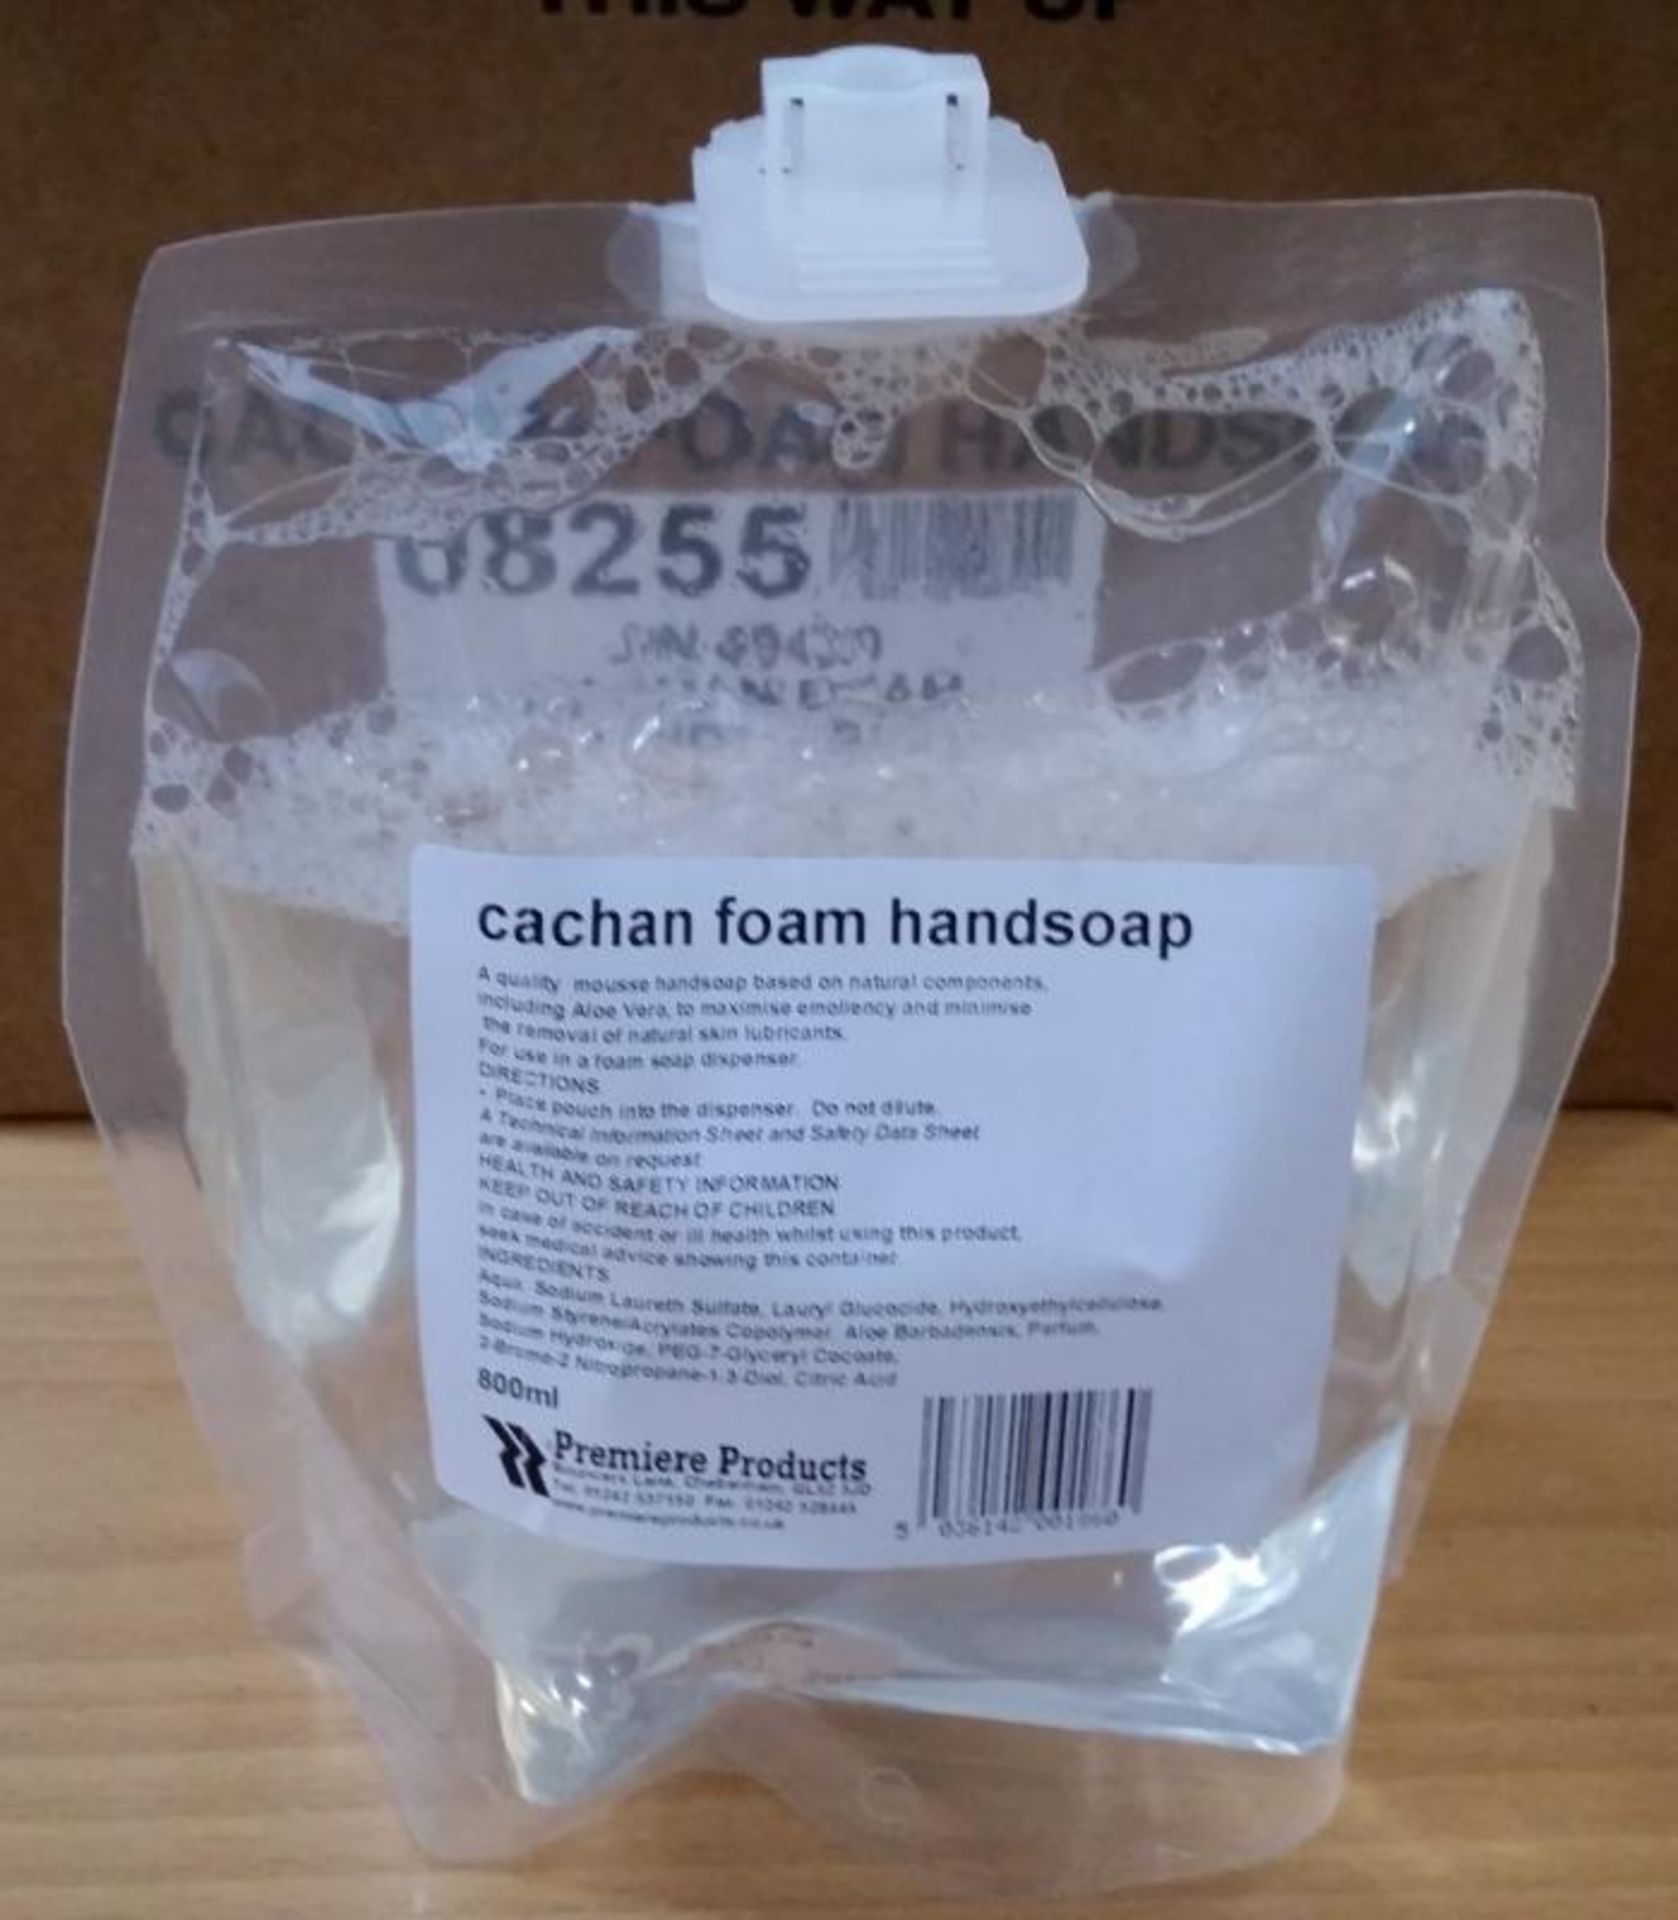 24 x Cachan Foam 800ml Handwash - Suitable For Foaming Dispnesers - Expiry December 2018 - Includes